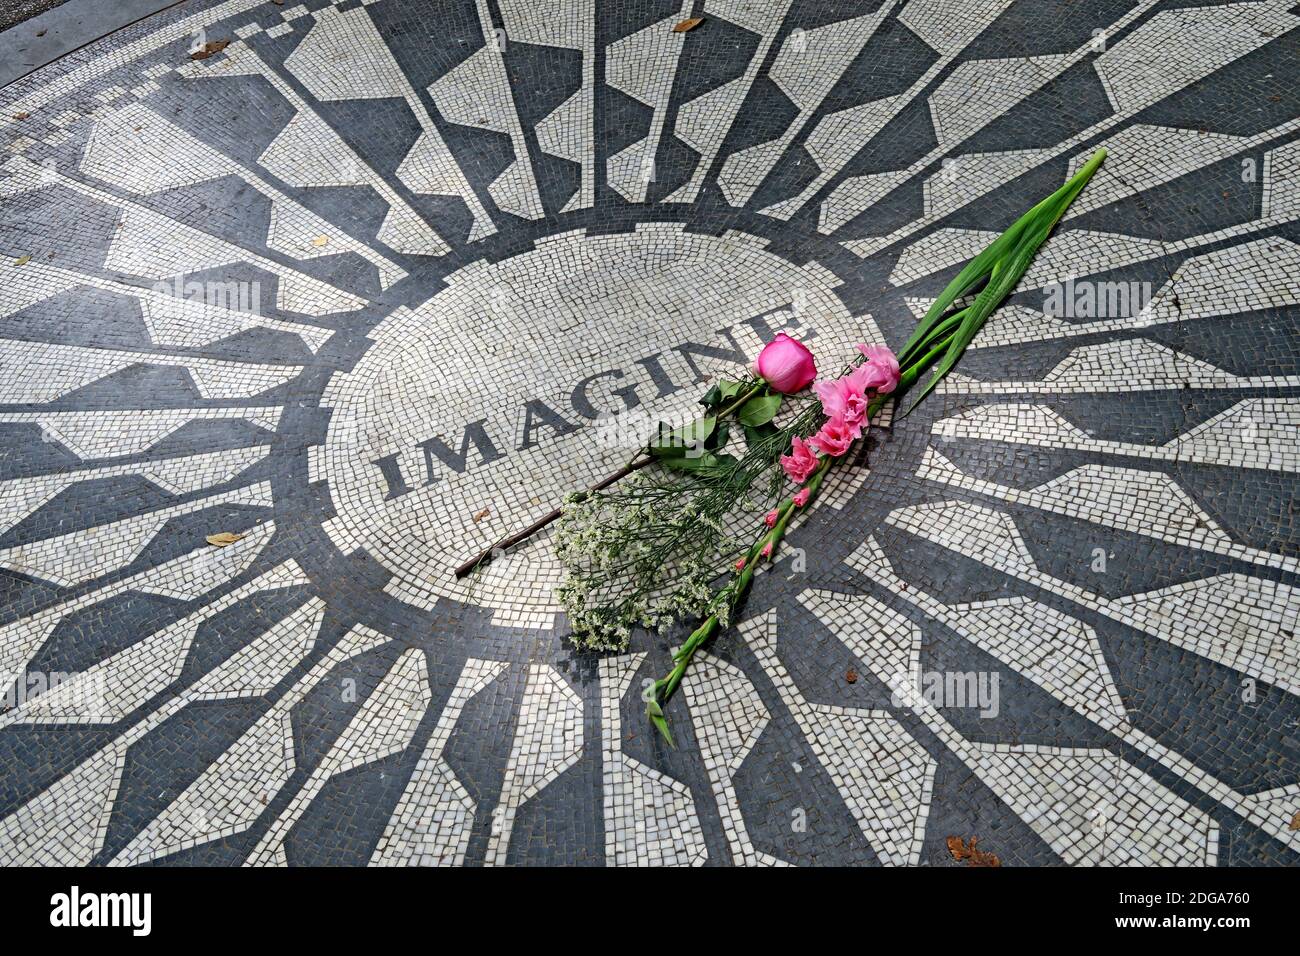 Imagine,John Lennon Memorial, Central park New York,NY,USA,memorial mosaic,Strawberry Fields by Bruce Kelly,West 72nd Street Stock Photo